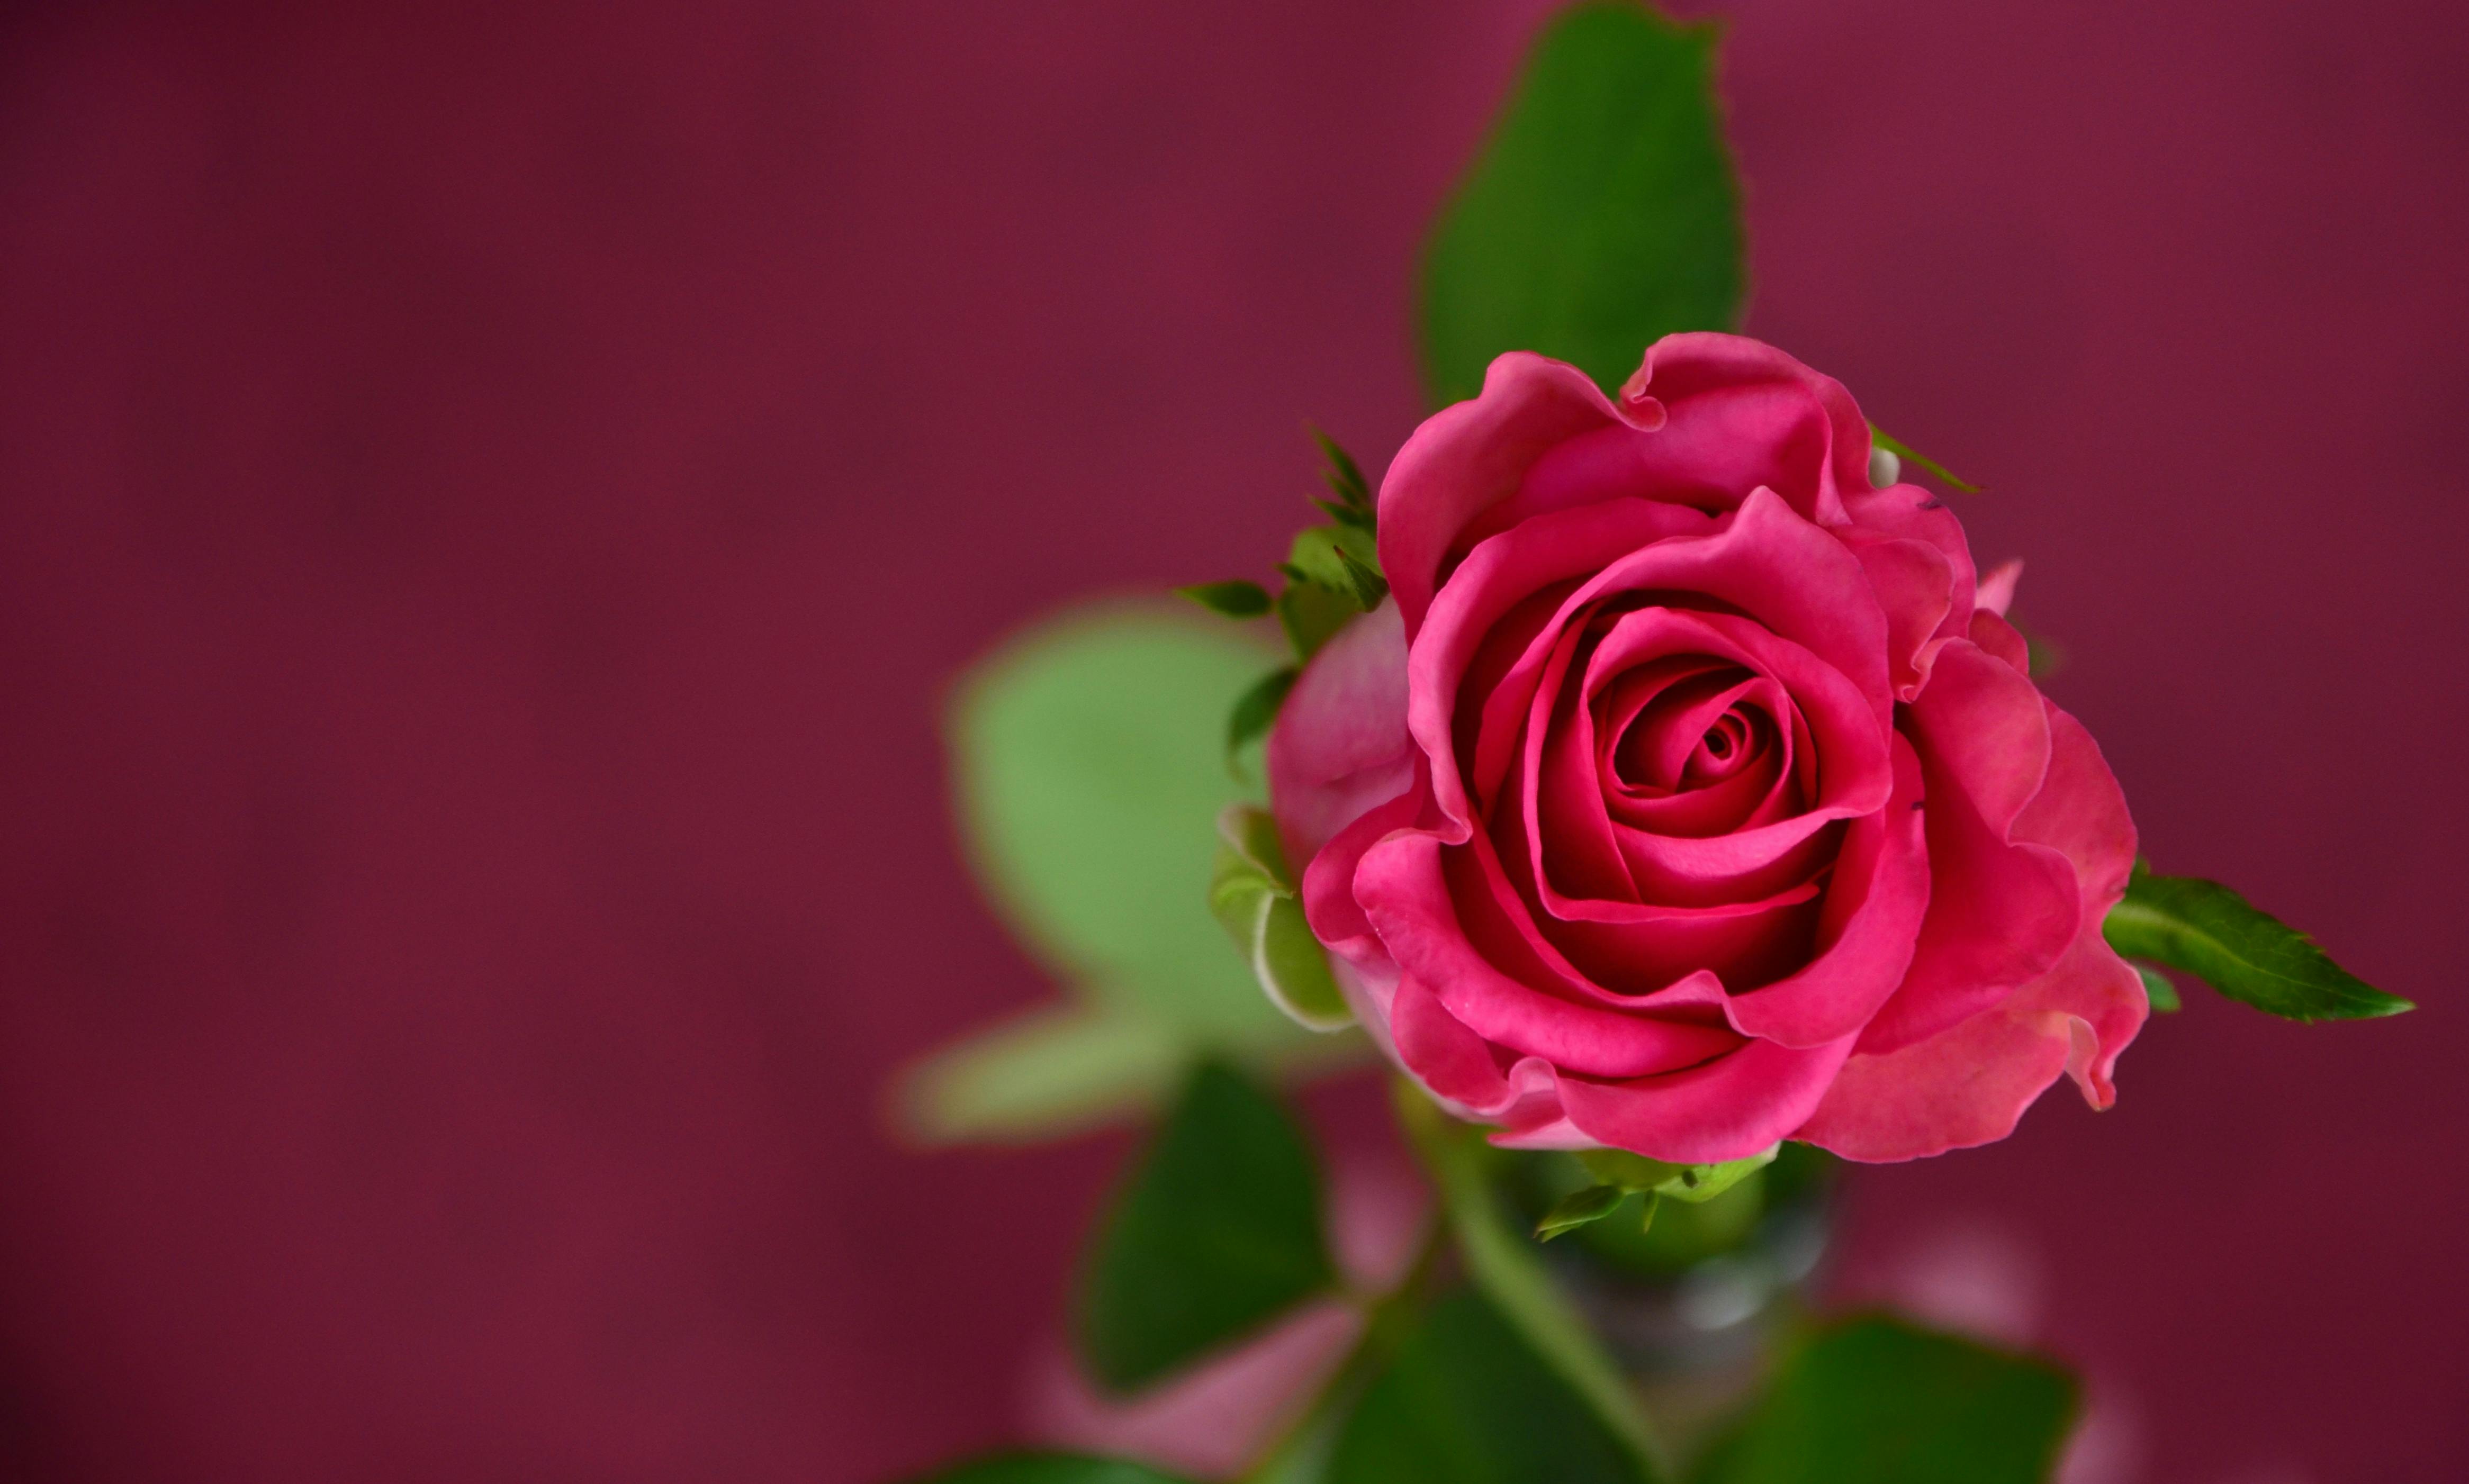 rose-invitation-coupon-pink.jpg (4664×2804)